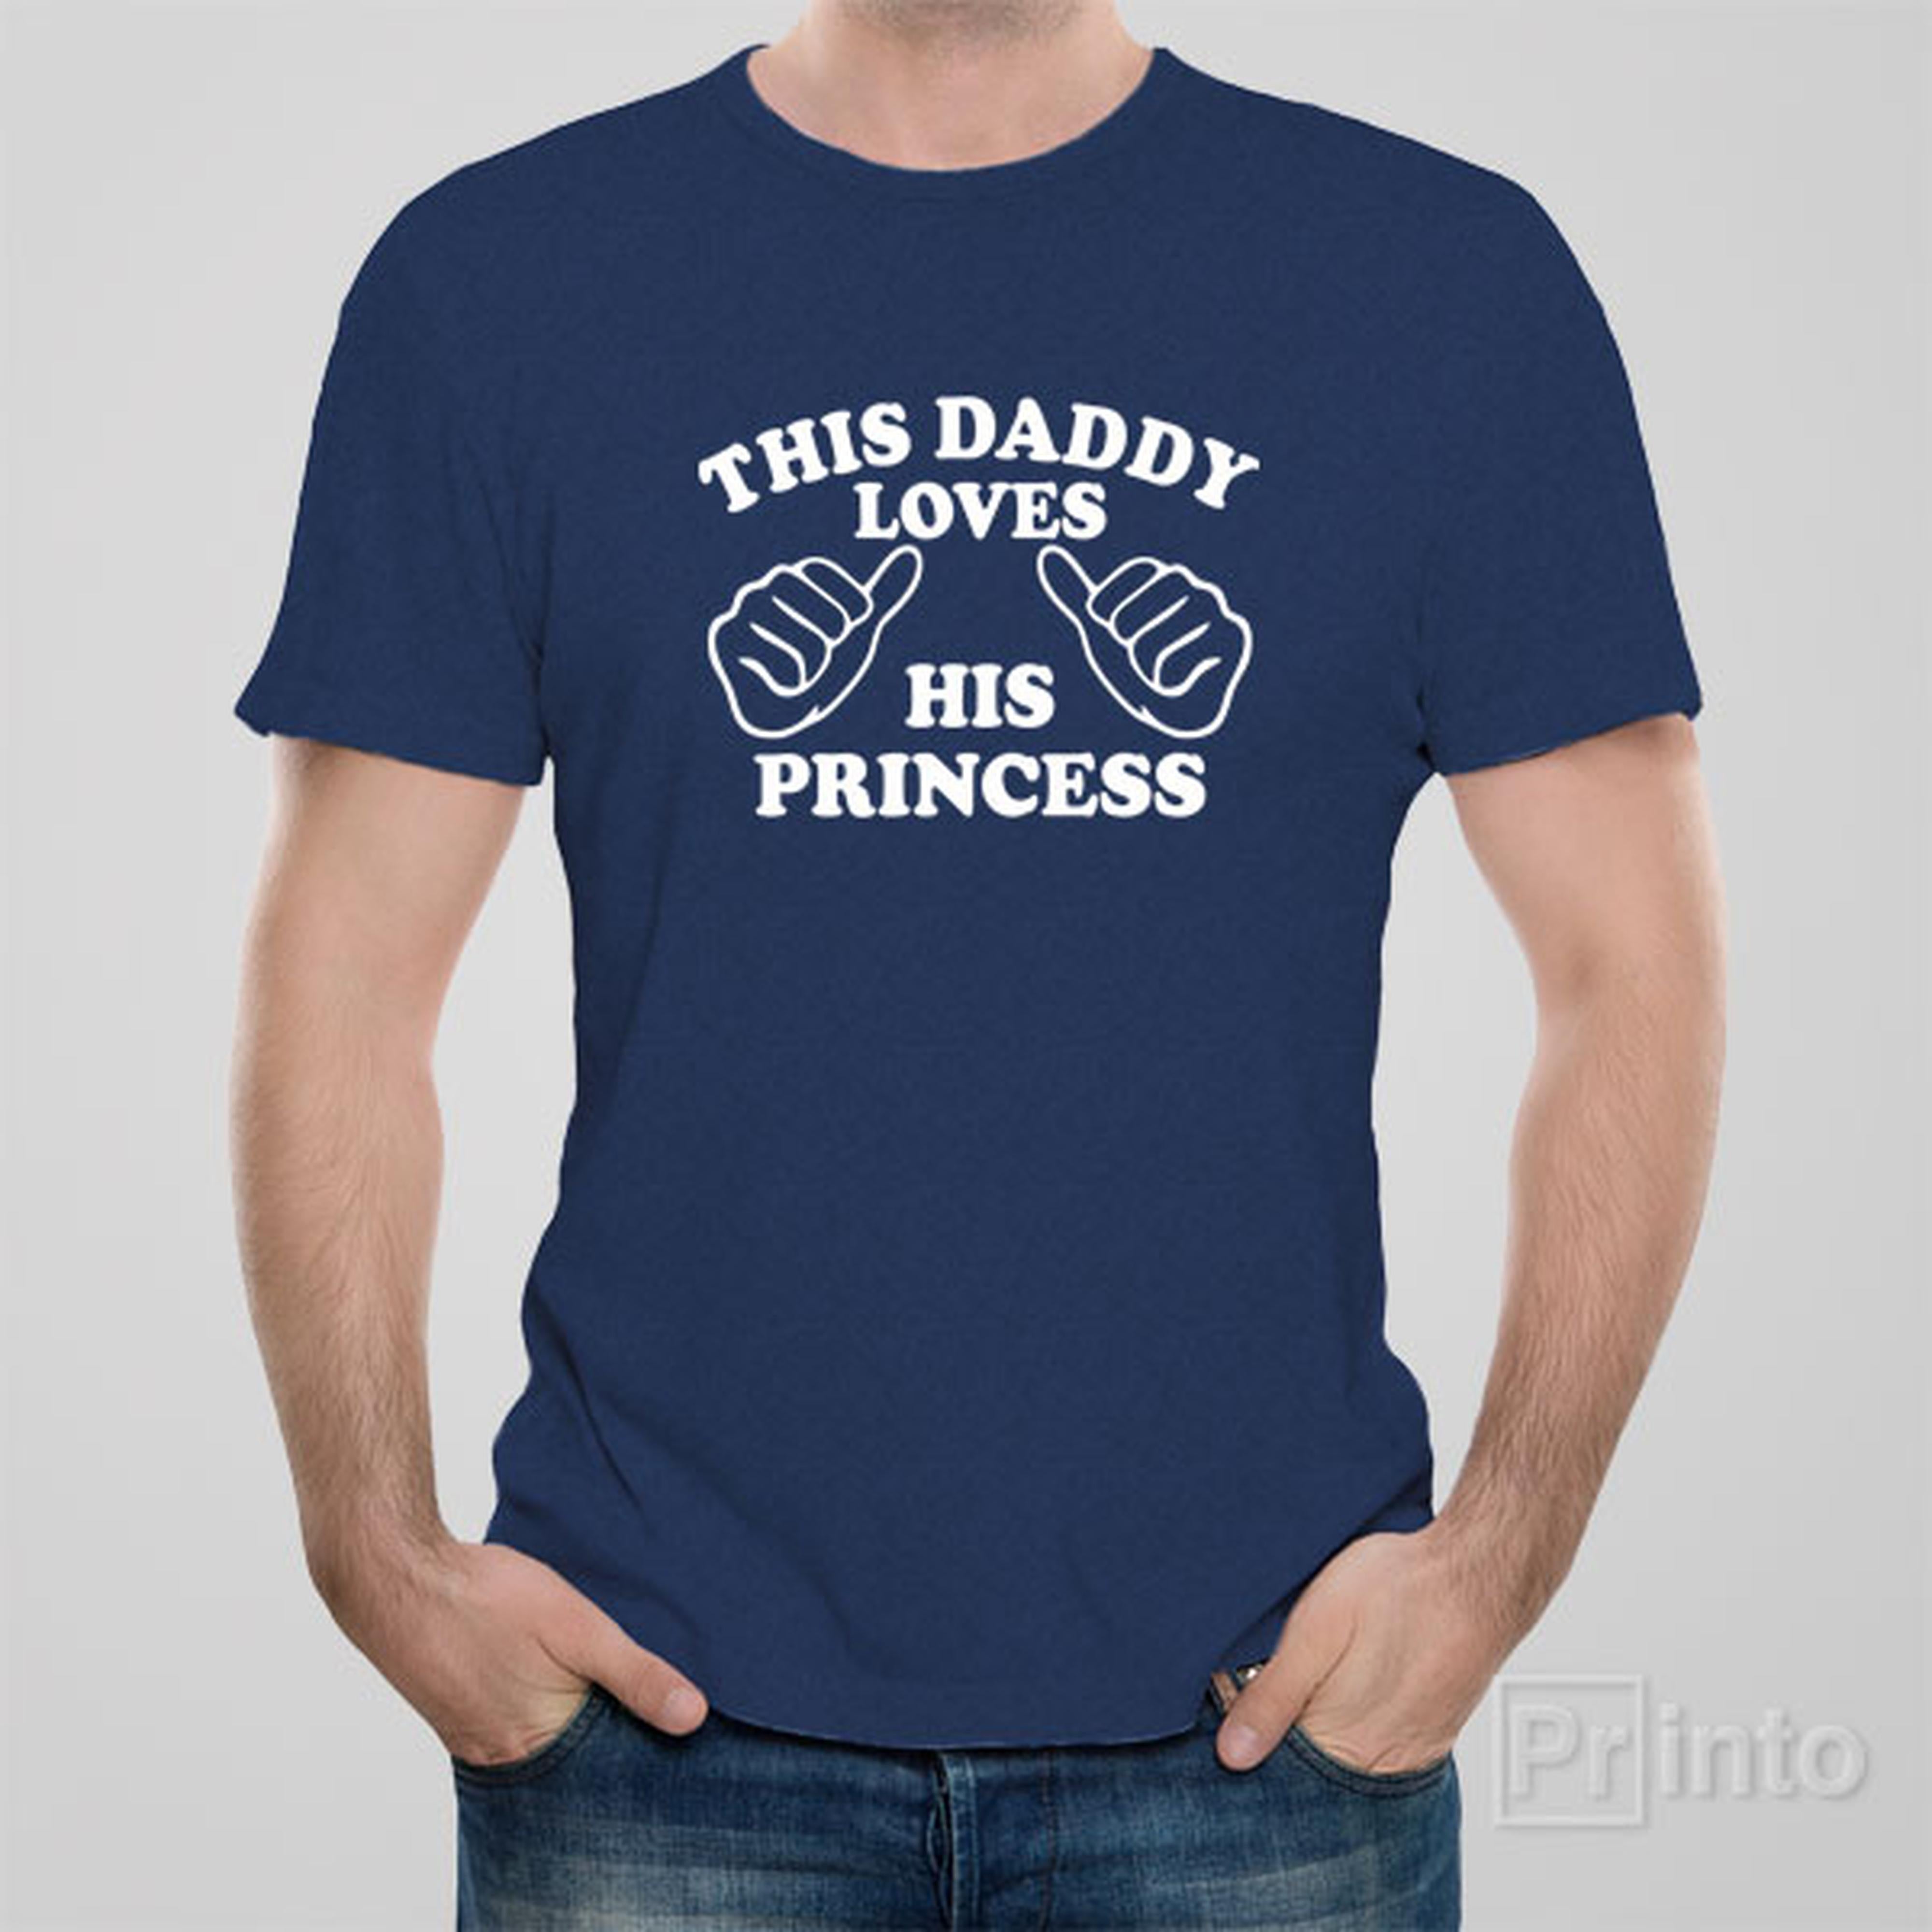 this-daddy-loves-his-princess-t-shirt